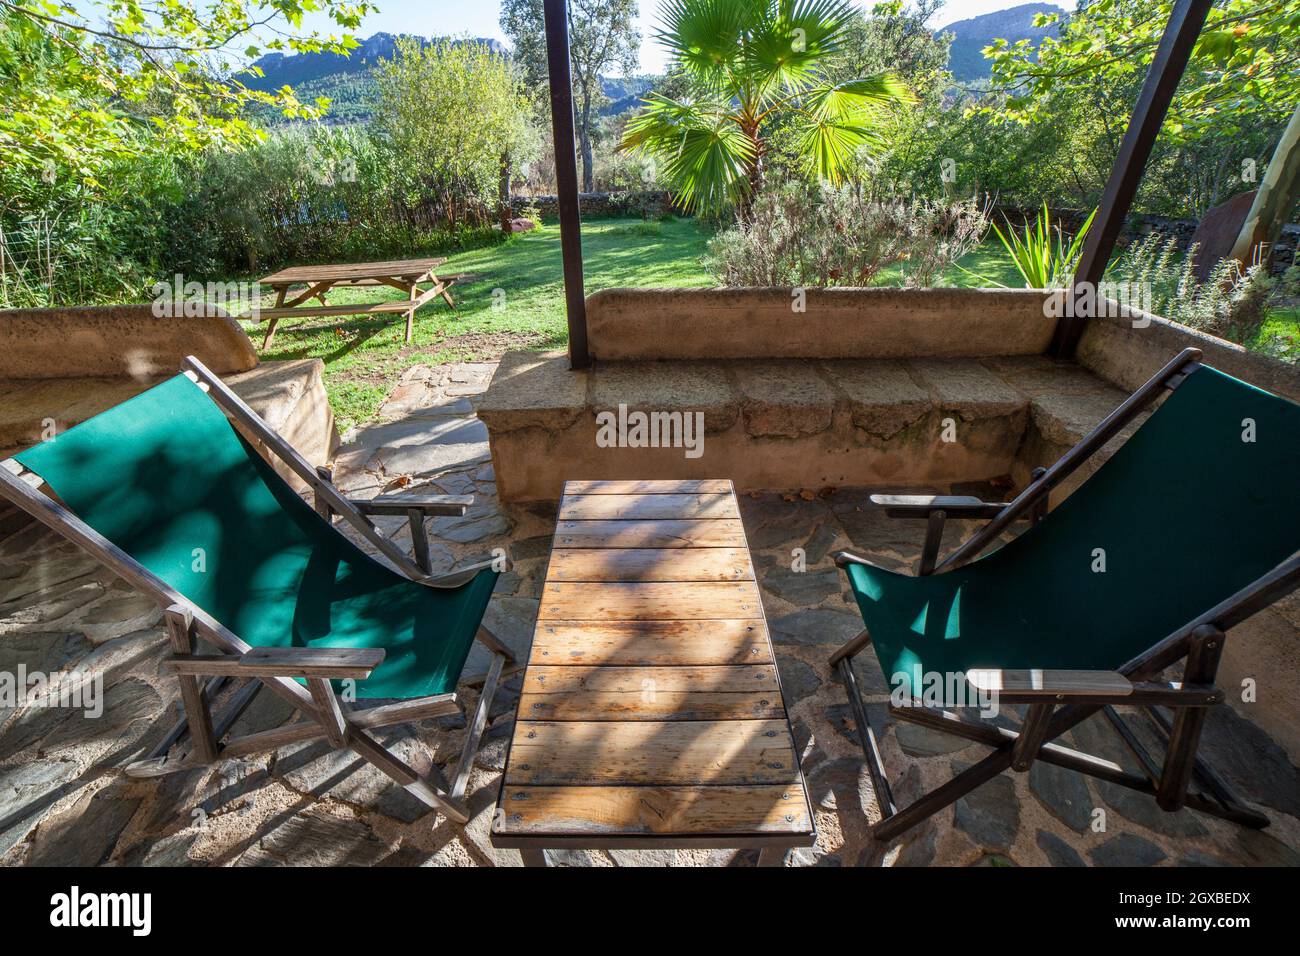 Casa de campo con porche con tumbonas de lona plegables. Concepto de turismo rural. Foto de stock